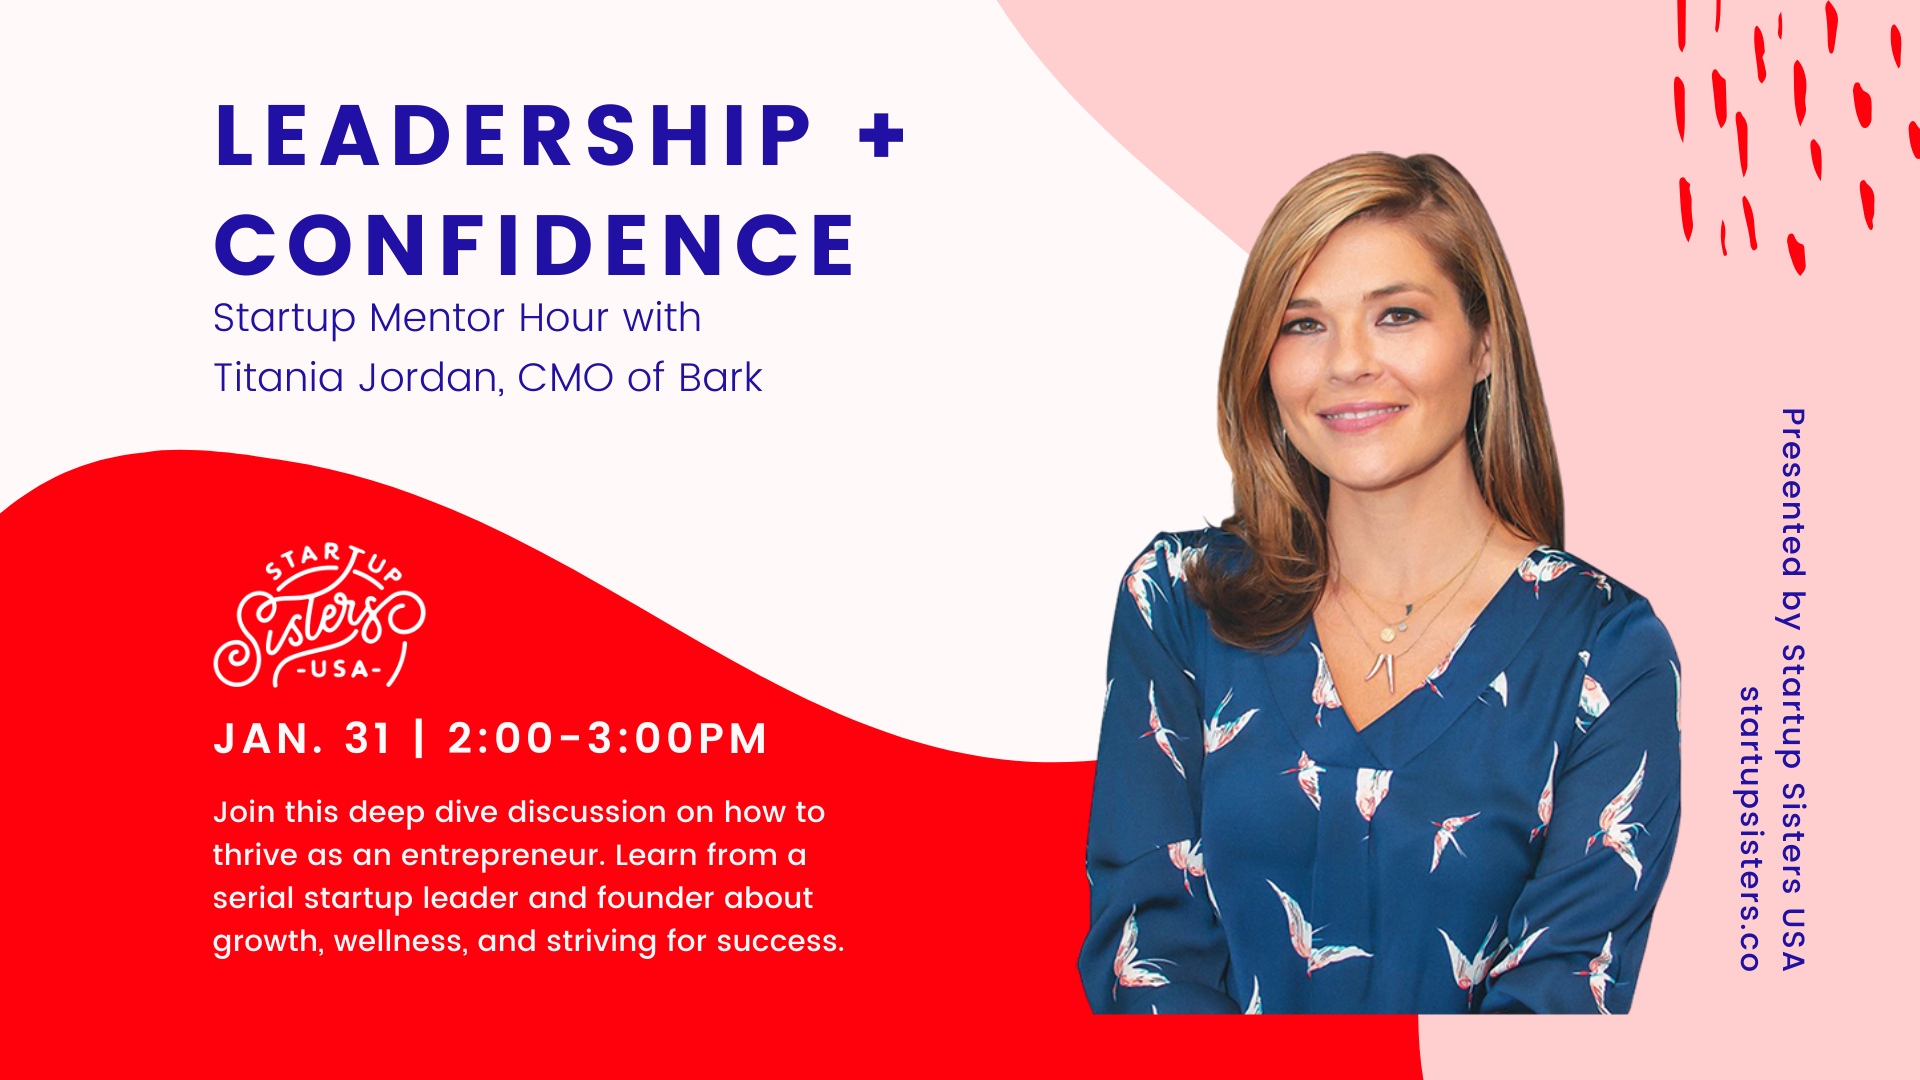 Startup Leadership + Confidence ⚡Mentor Hour with Titania Jordan of Bark